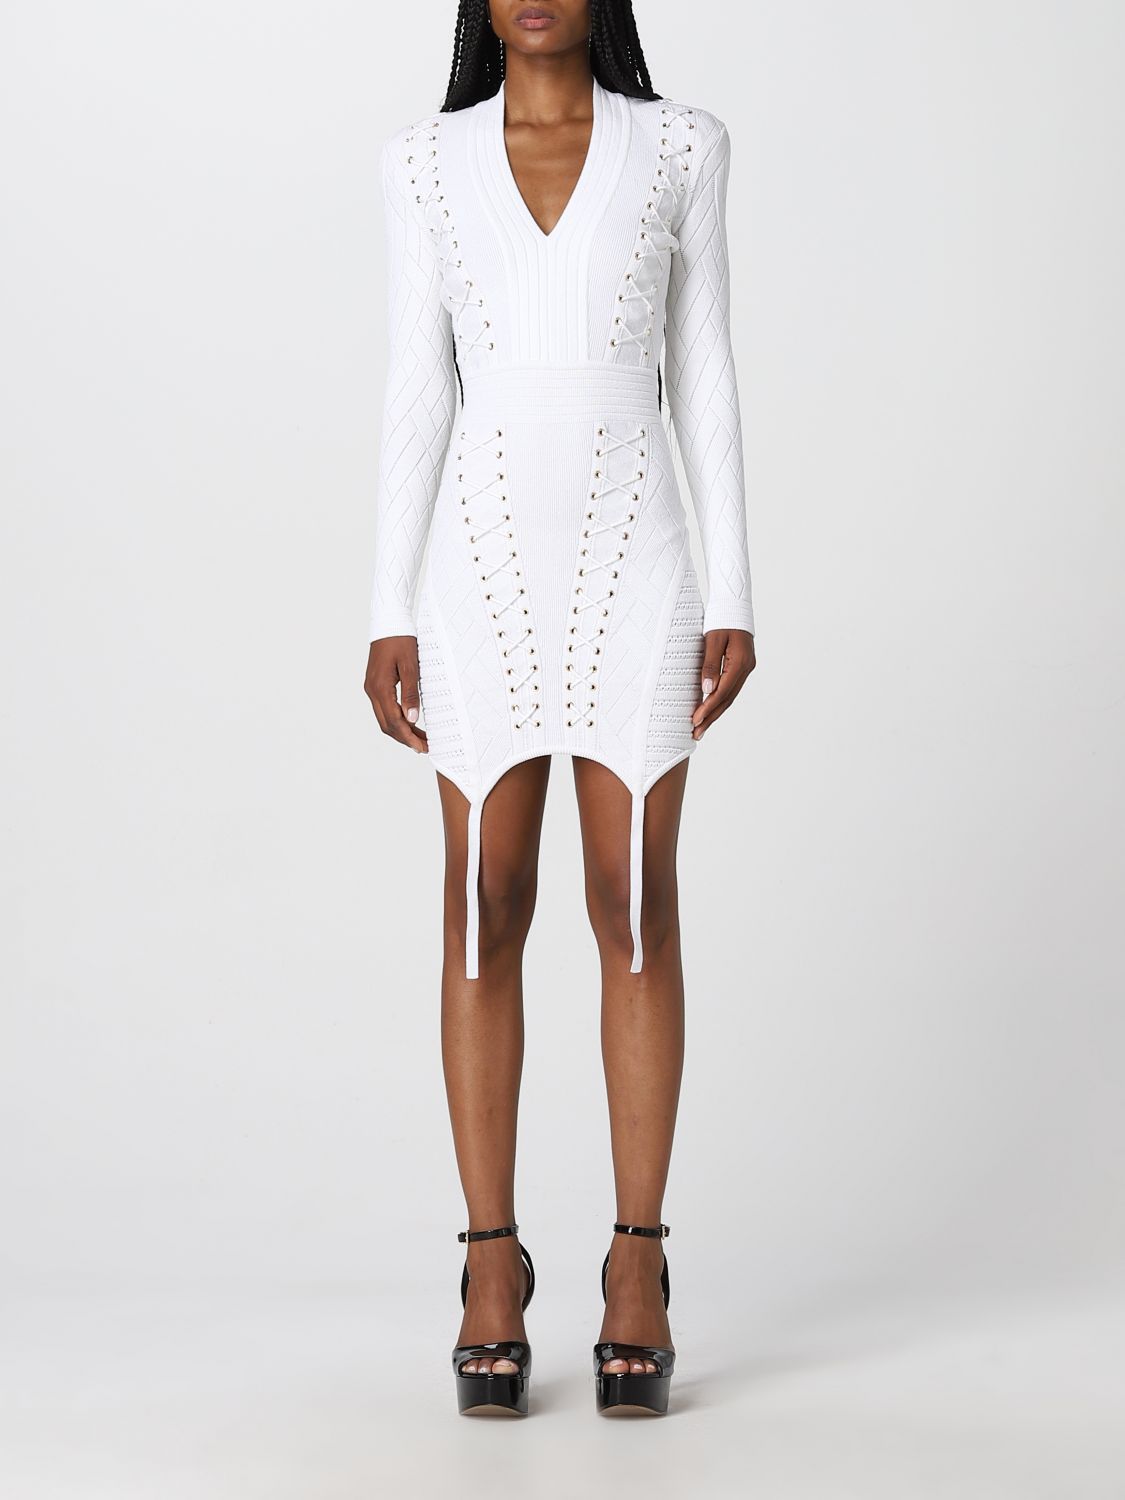 BALMAIN: for woman - White | Balmain dress YF1R8519KC28 on GIGLIO.COM